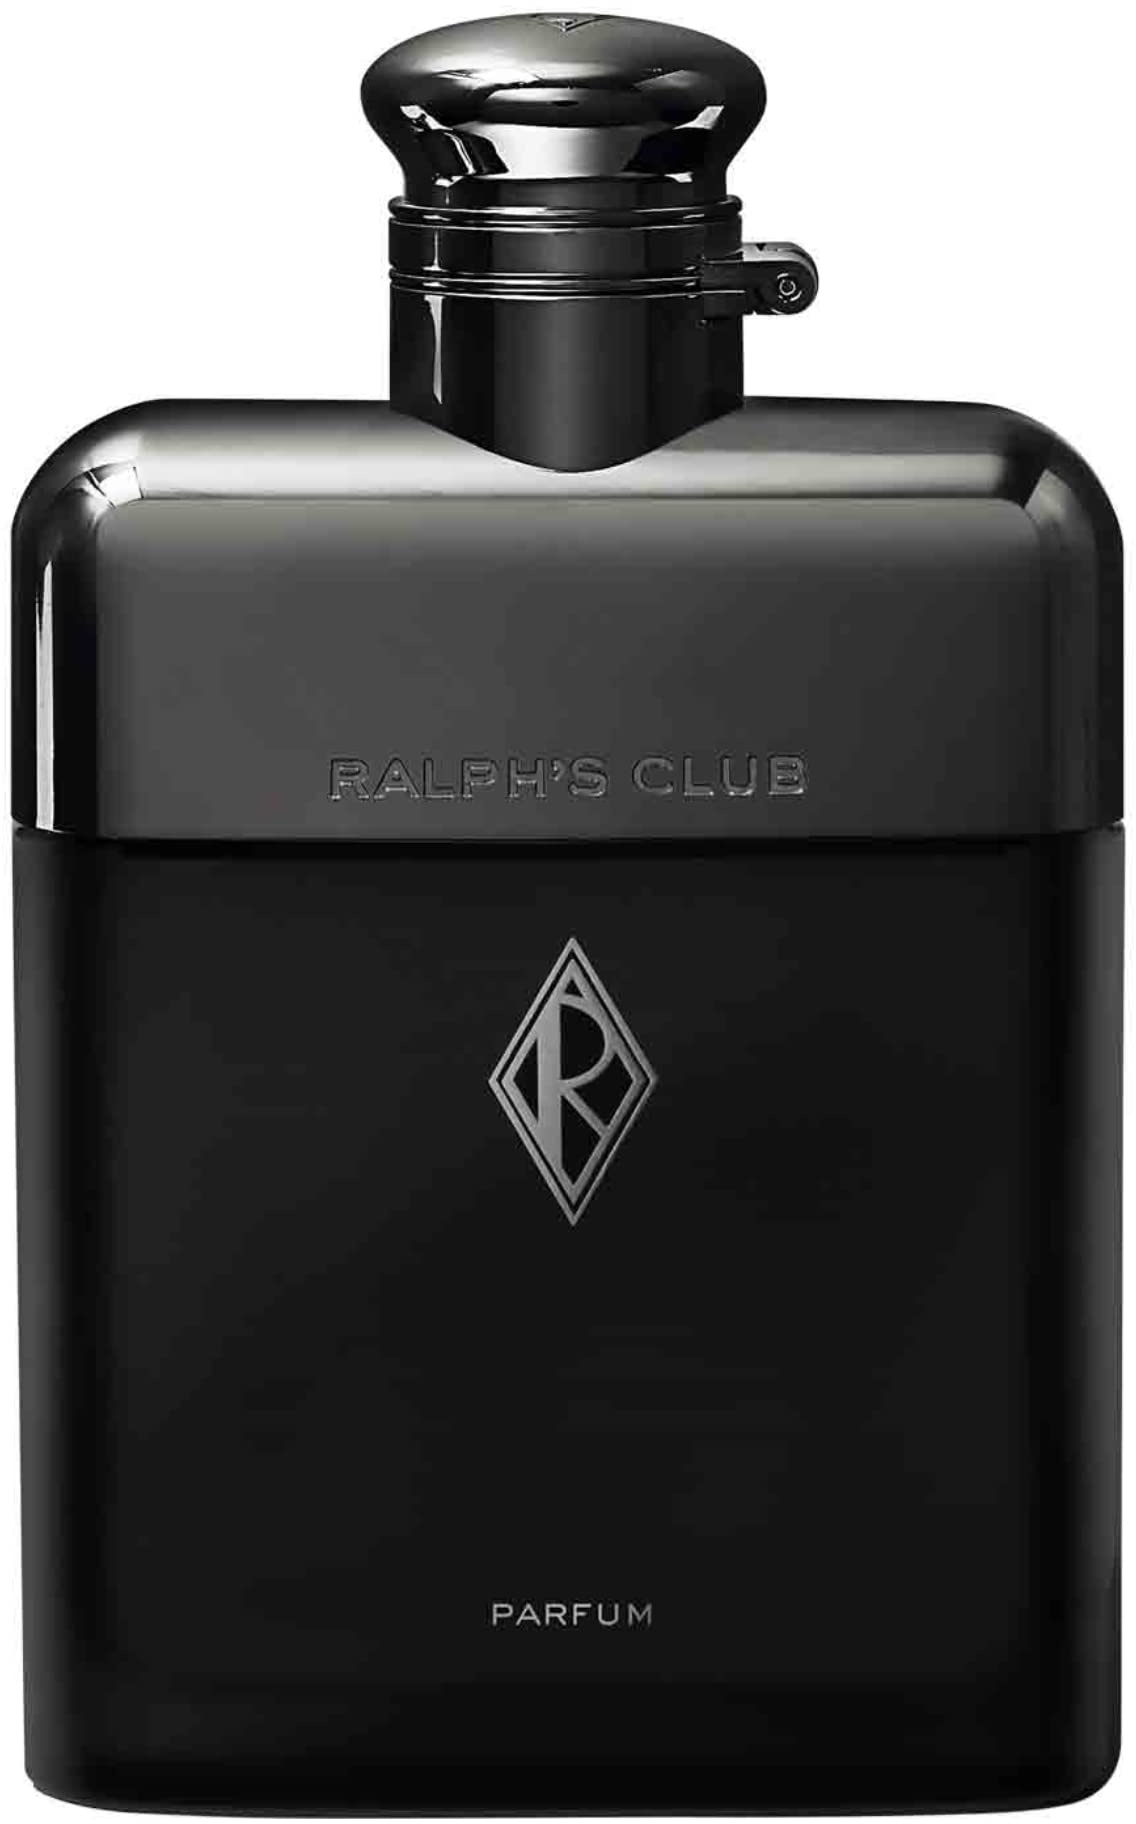 RALPH'S CLUB Parfum edp vapo 100 ml